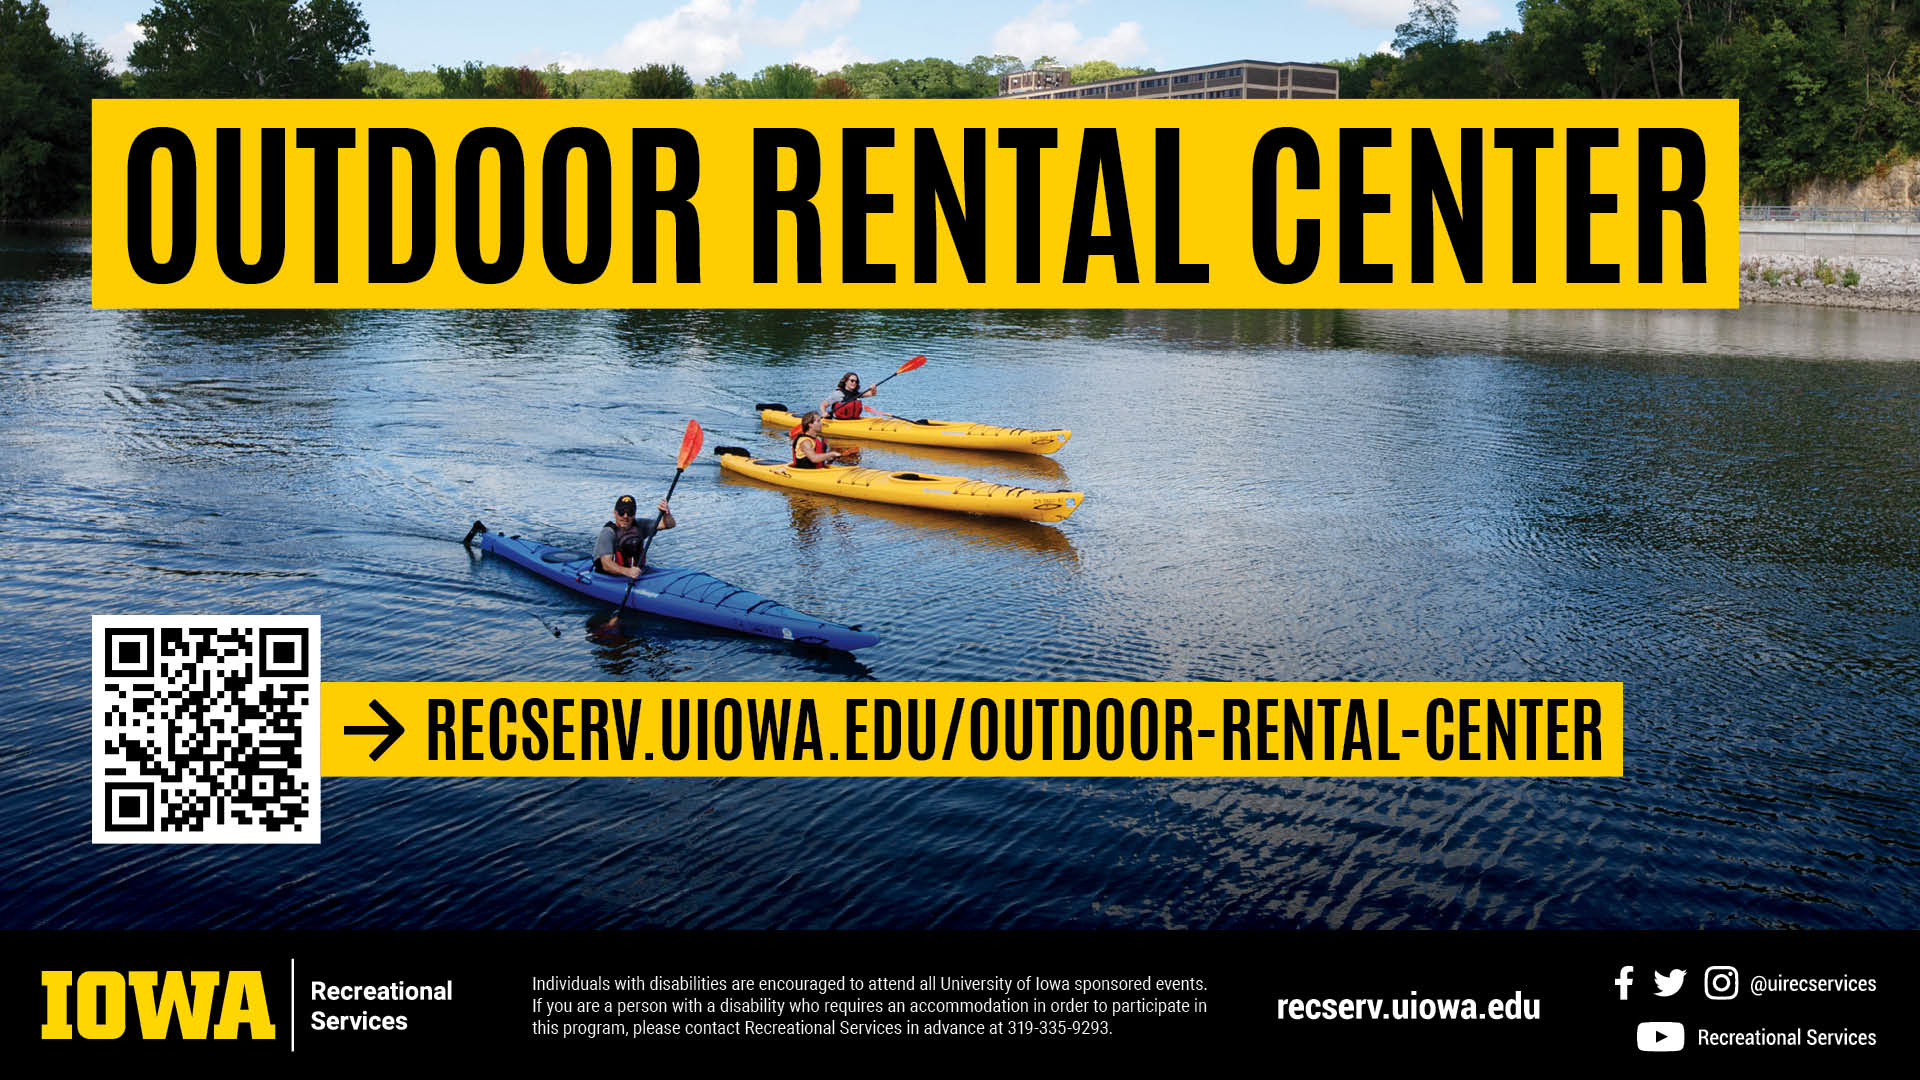 recserv.uiowa.edu/outdoor-rental-center